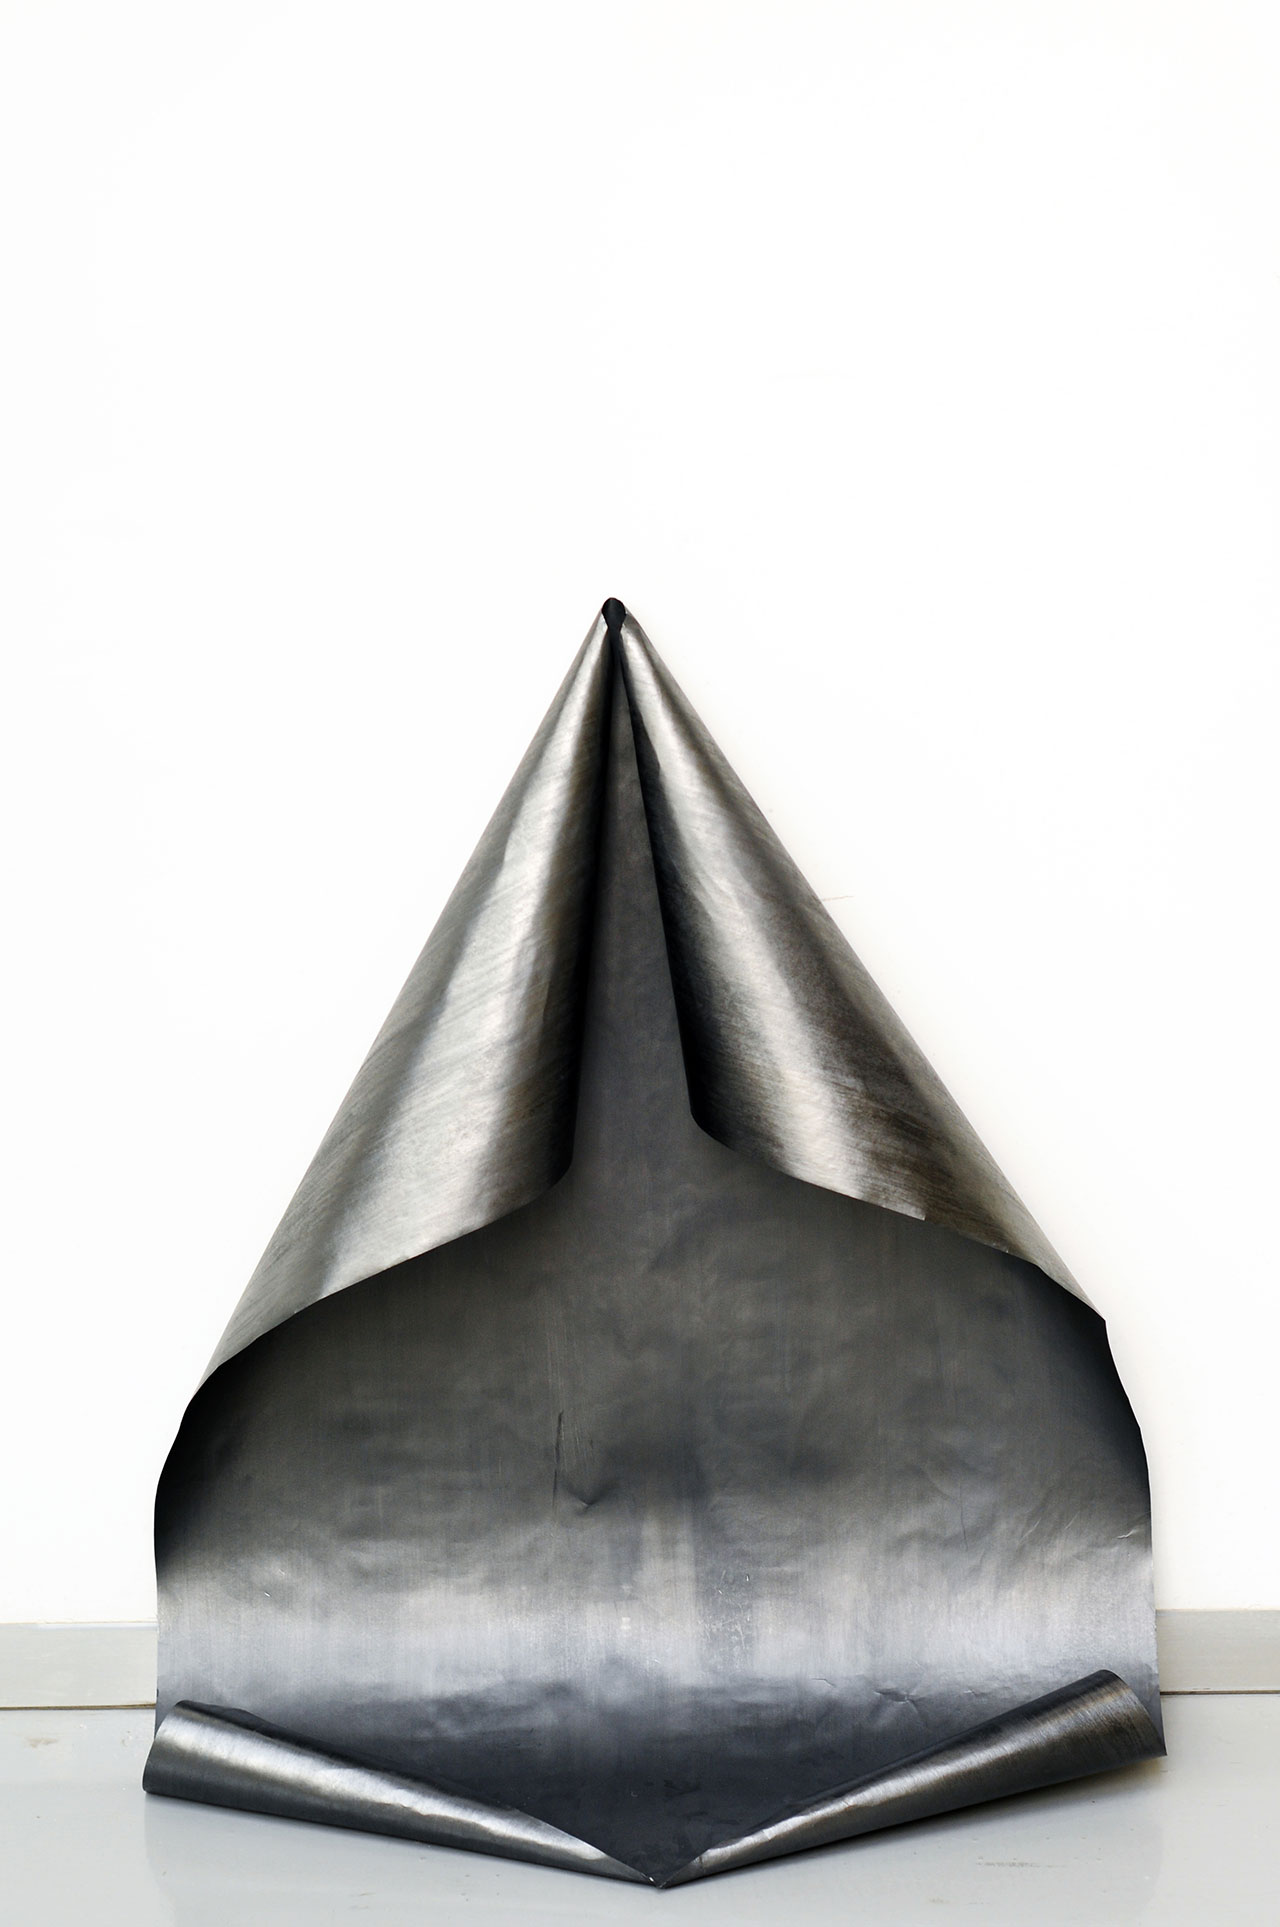 Despina Flessa, Fold, graphite on paper, 100 x 80 cm, 2015. Photo by Costas Christou.